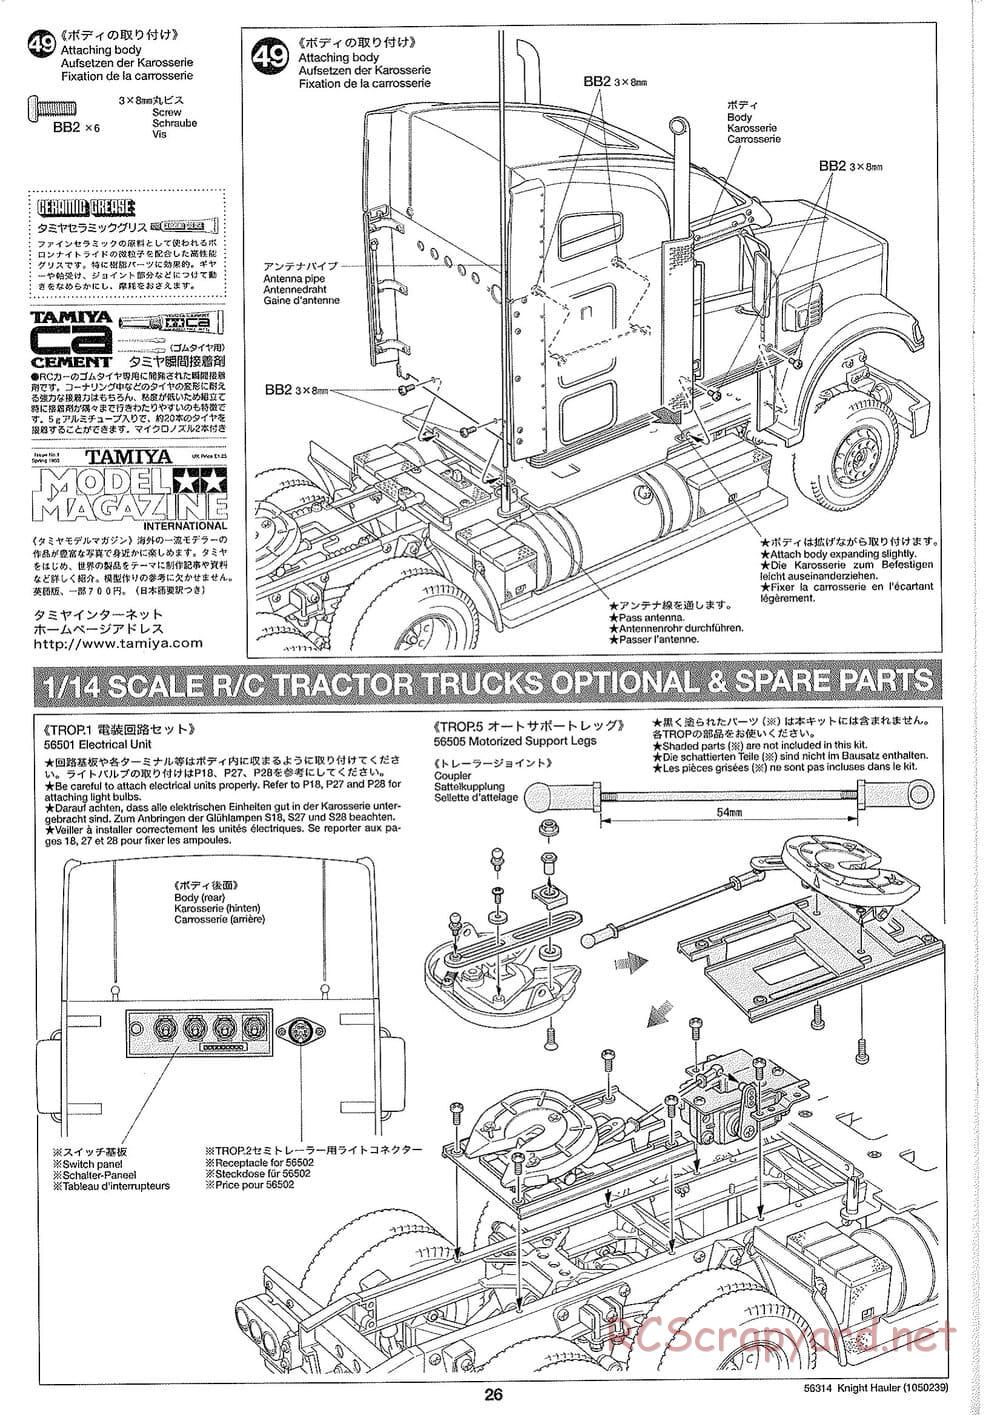 Tamiya - Knight Hauler Tractor Truck Chassis - Manual - Page 26